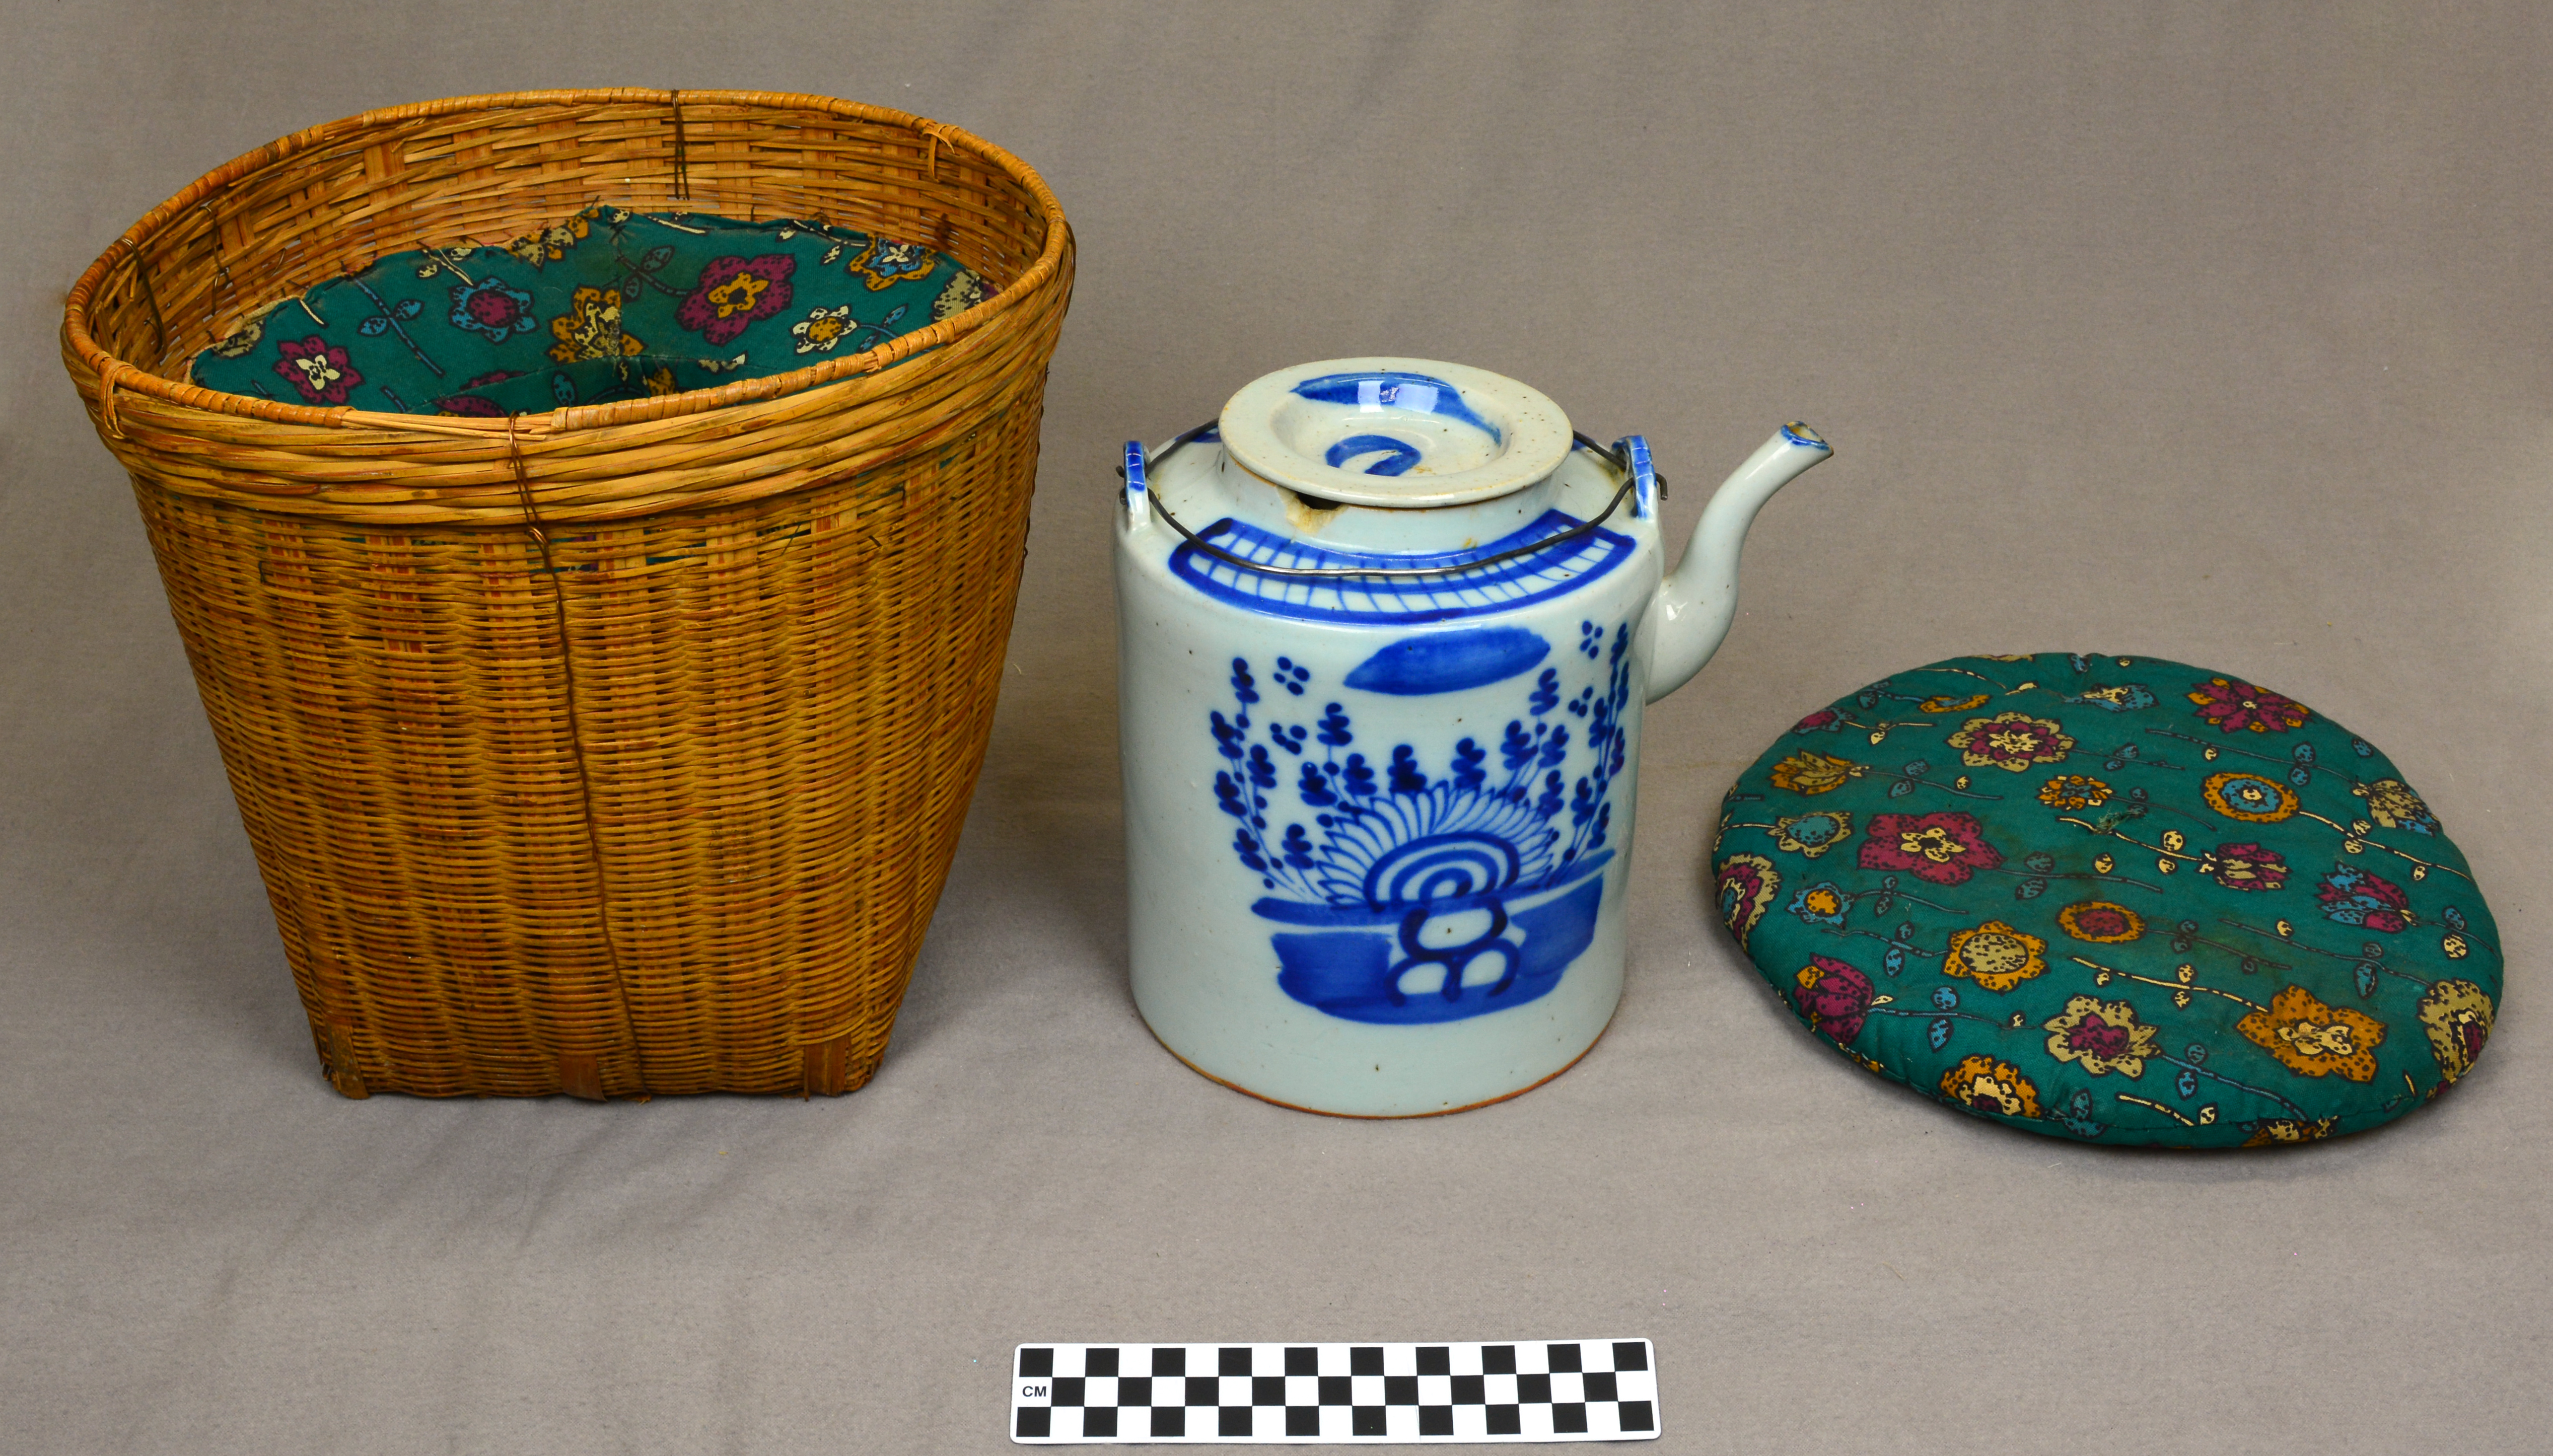 Object: Teapot (Chinese Teapot)